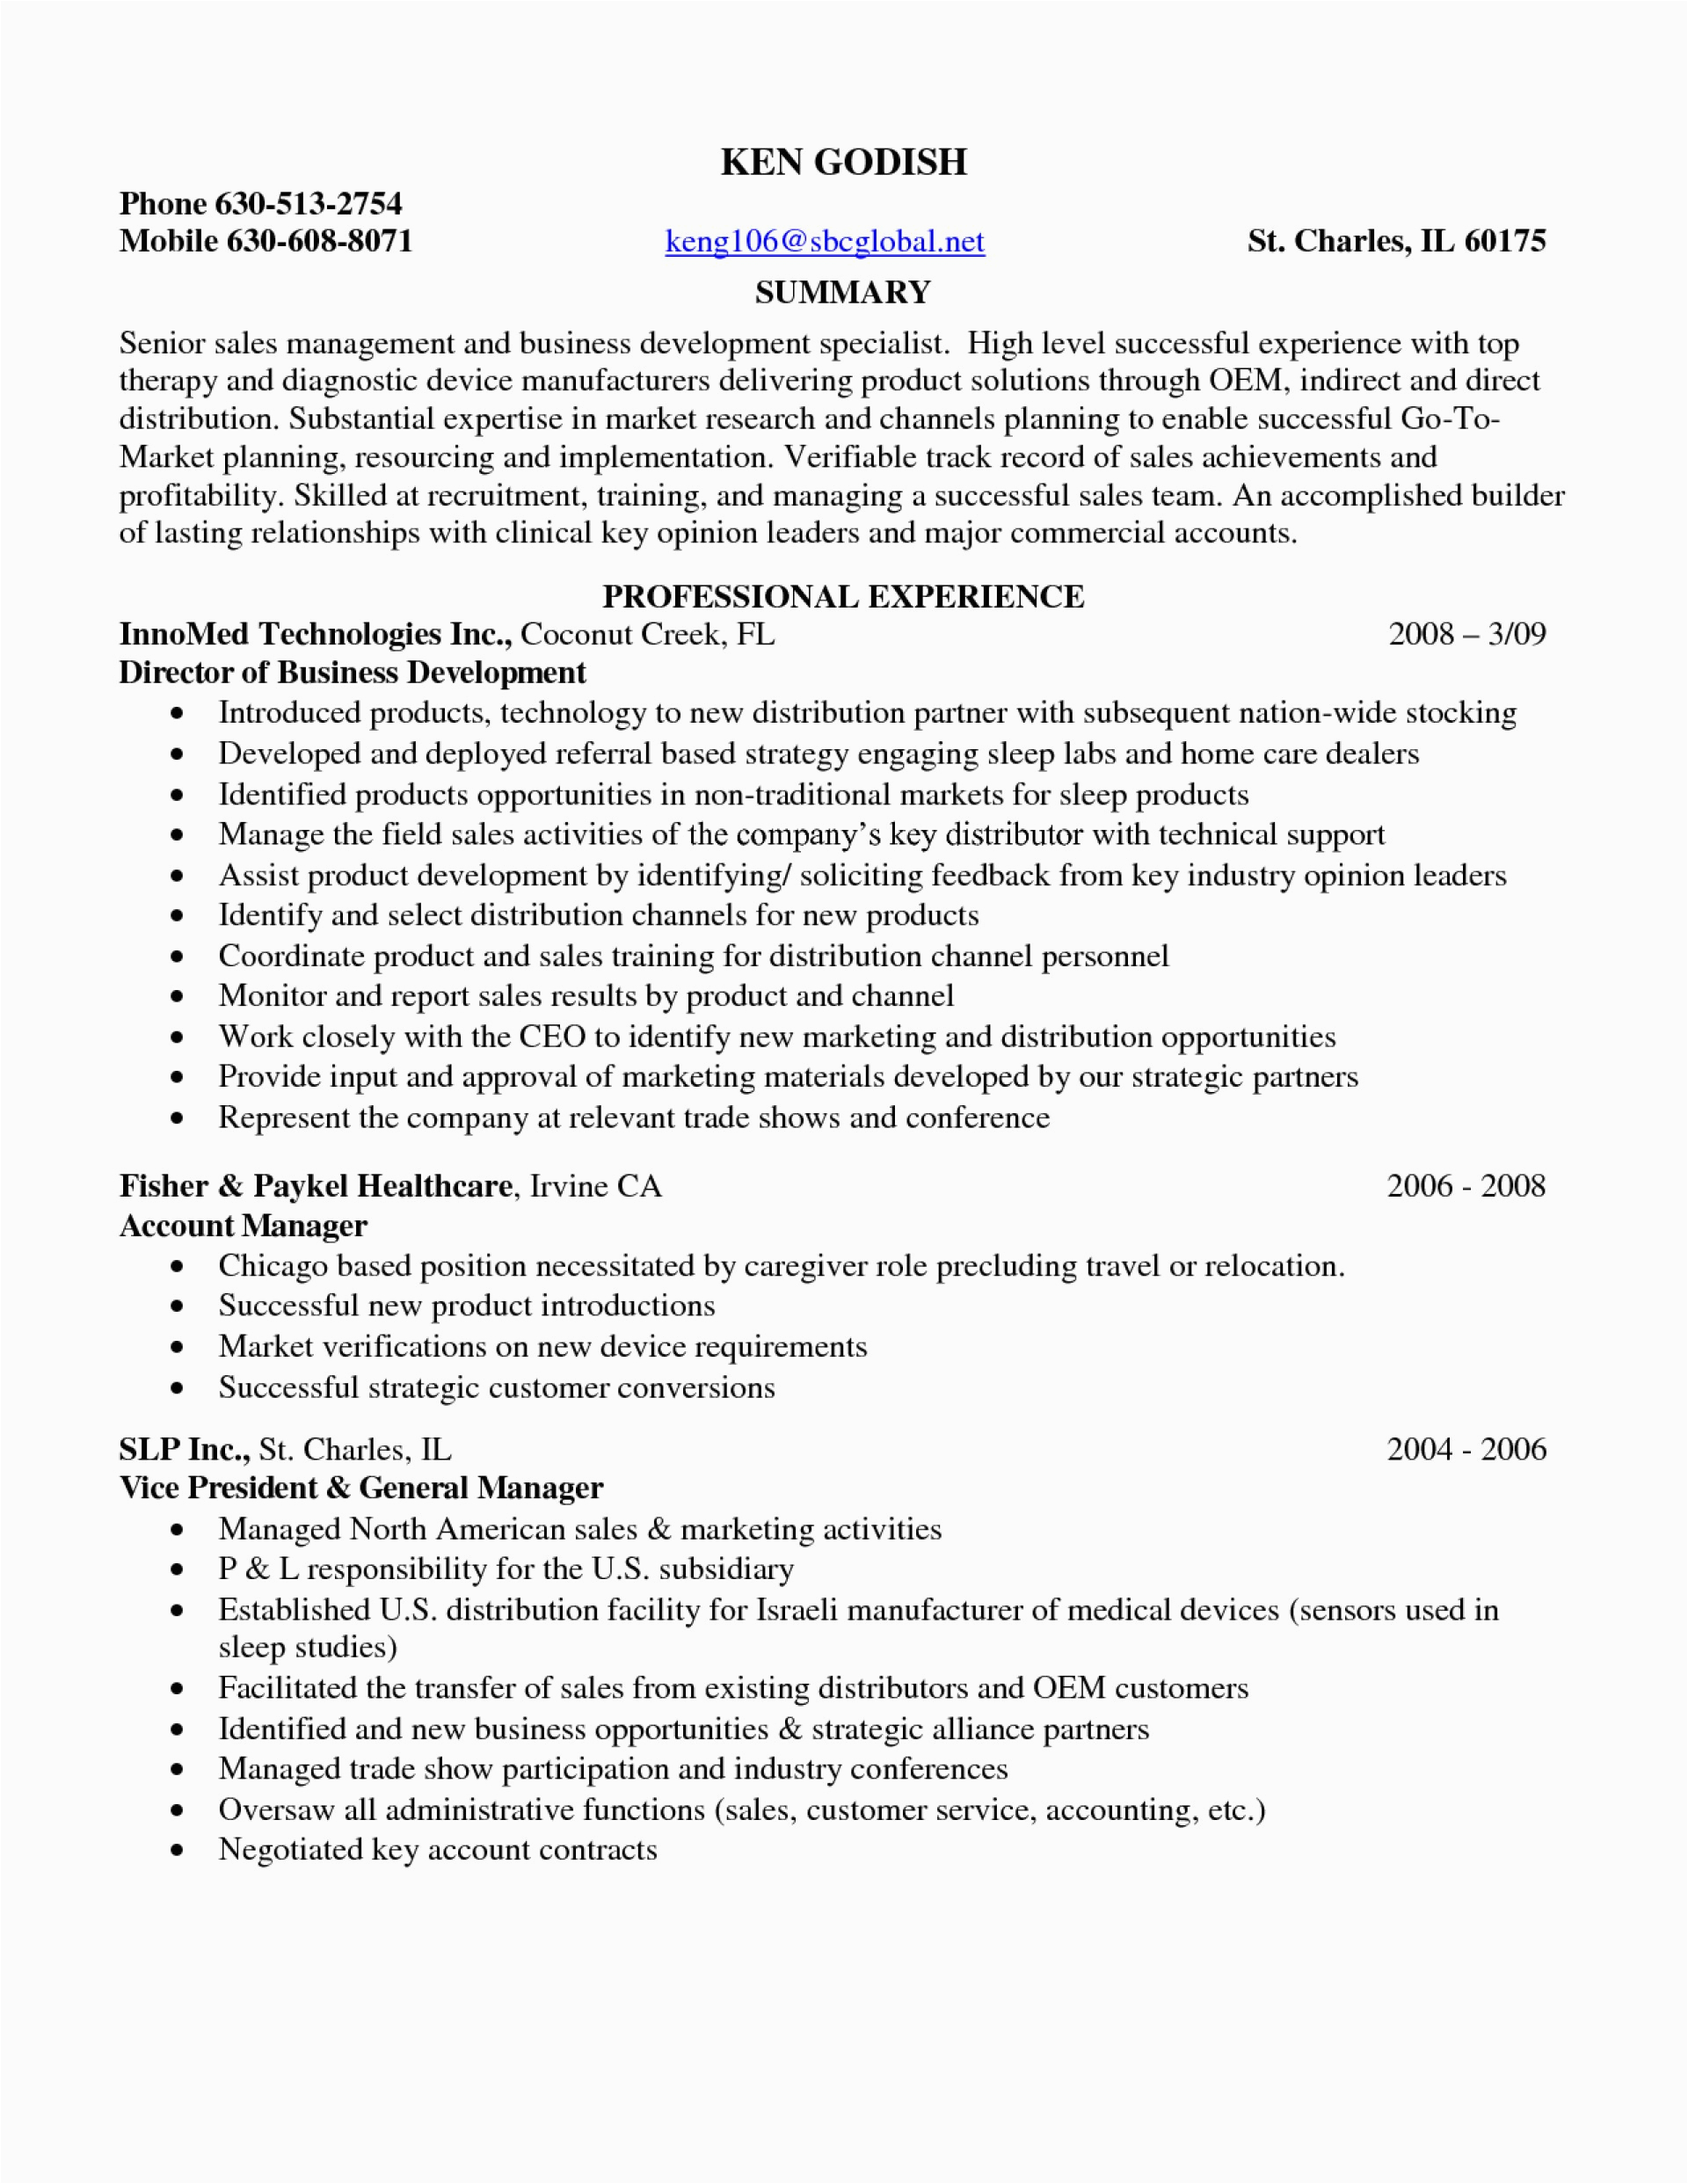 Sample Resume for Entry Level Nurse Practitioner Entry Level Nurse Practitioner Resume Template